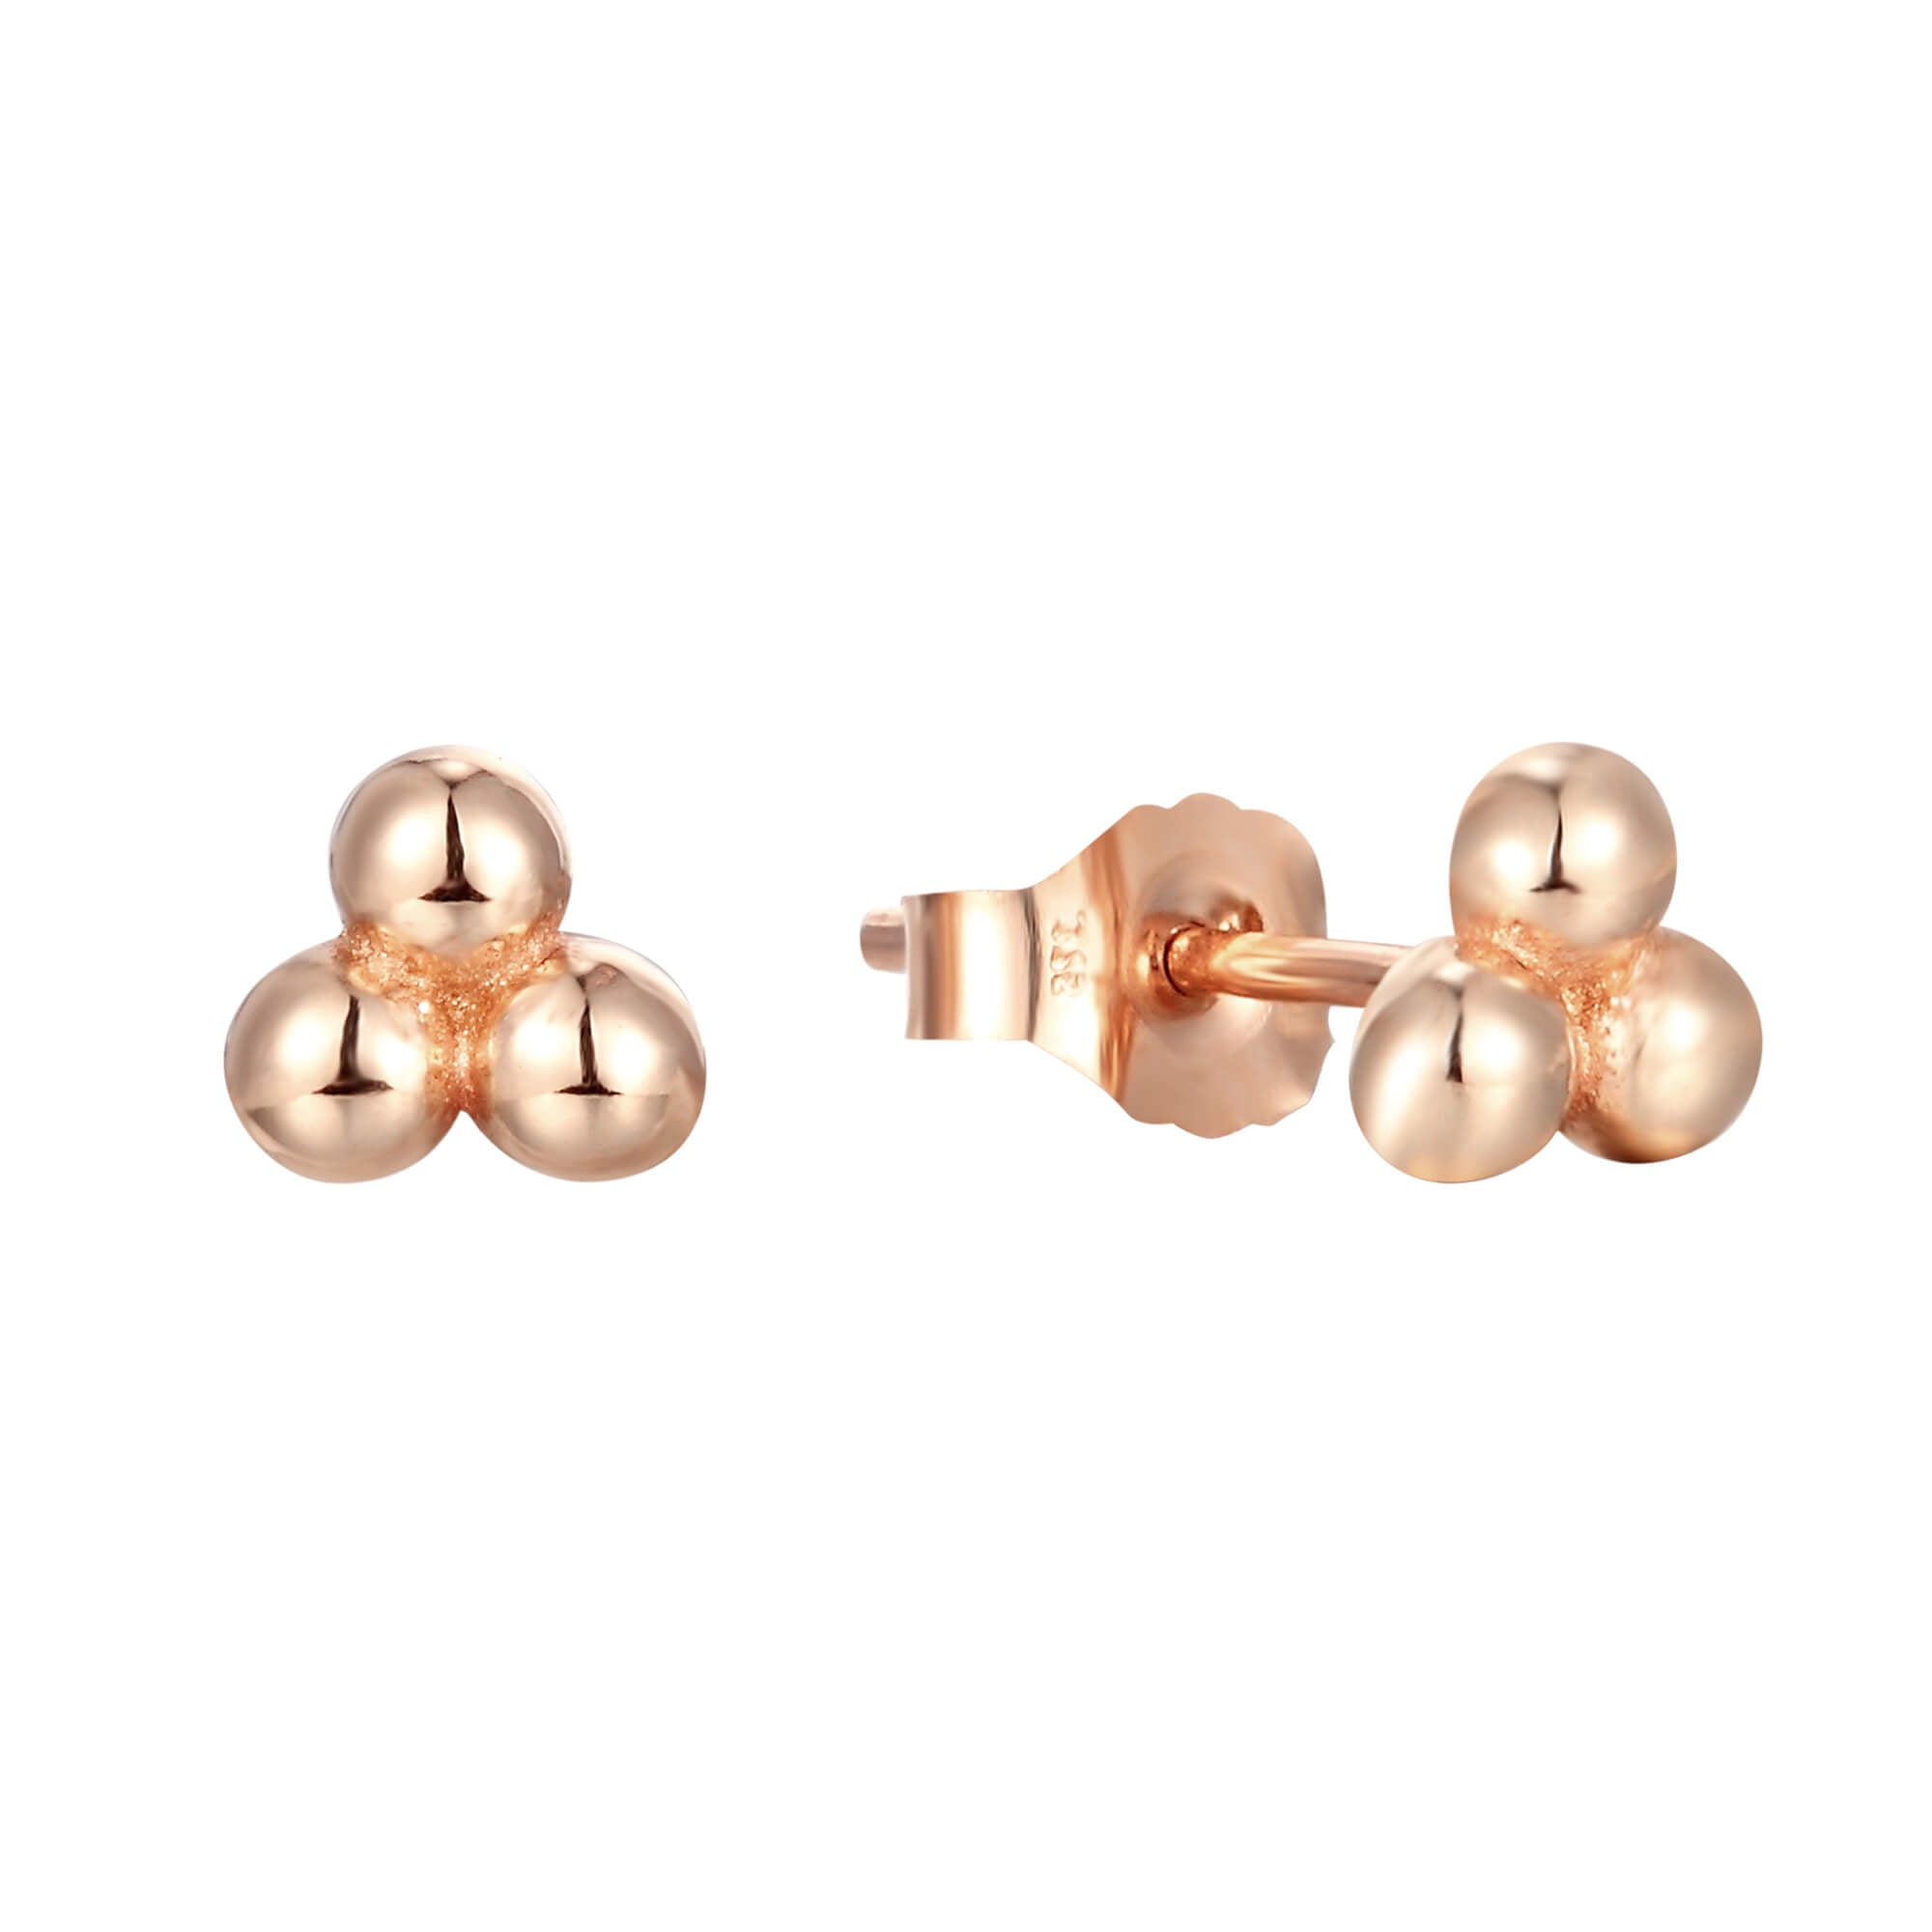 9ct rose gold earrings - seolgold